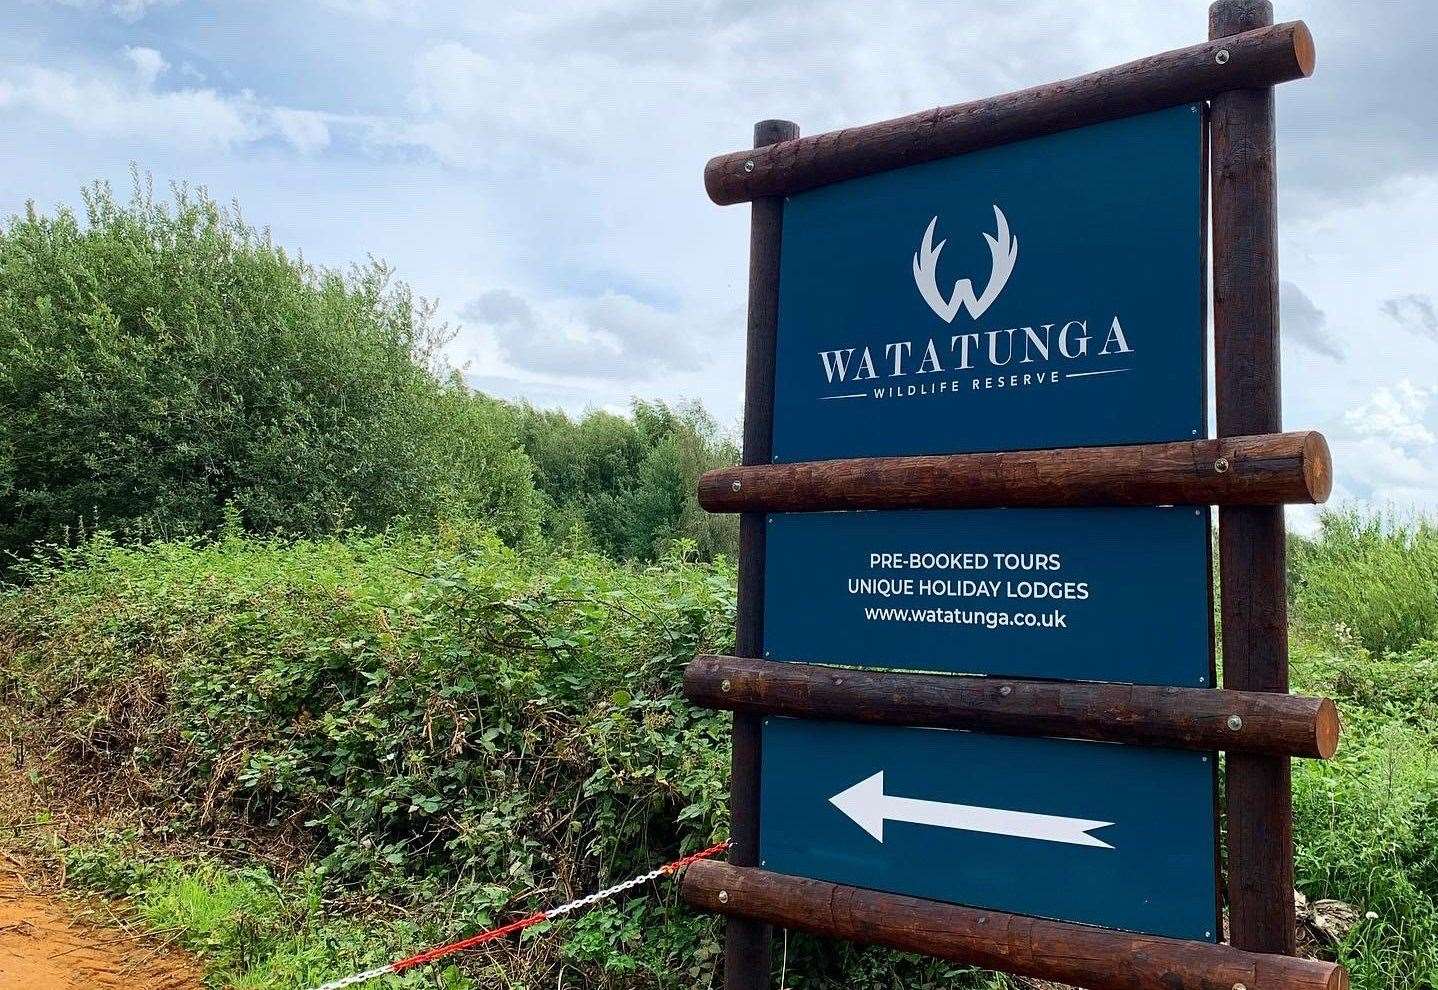 Watatunga Wildlife Reserve